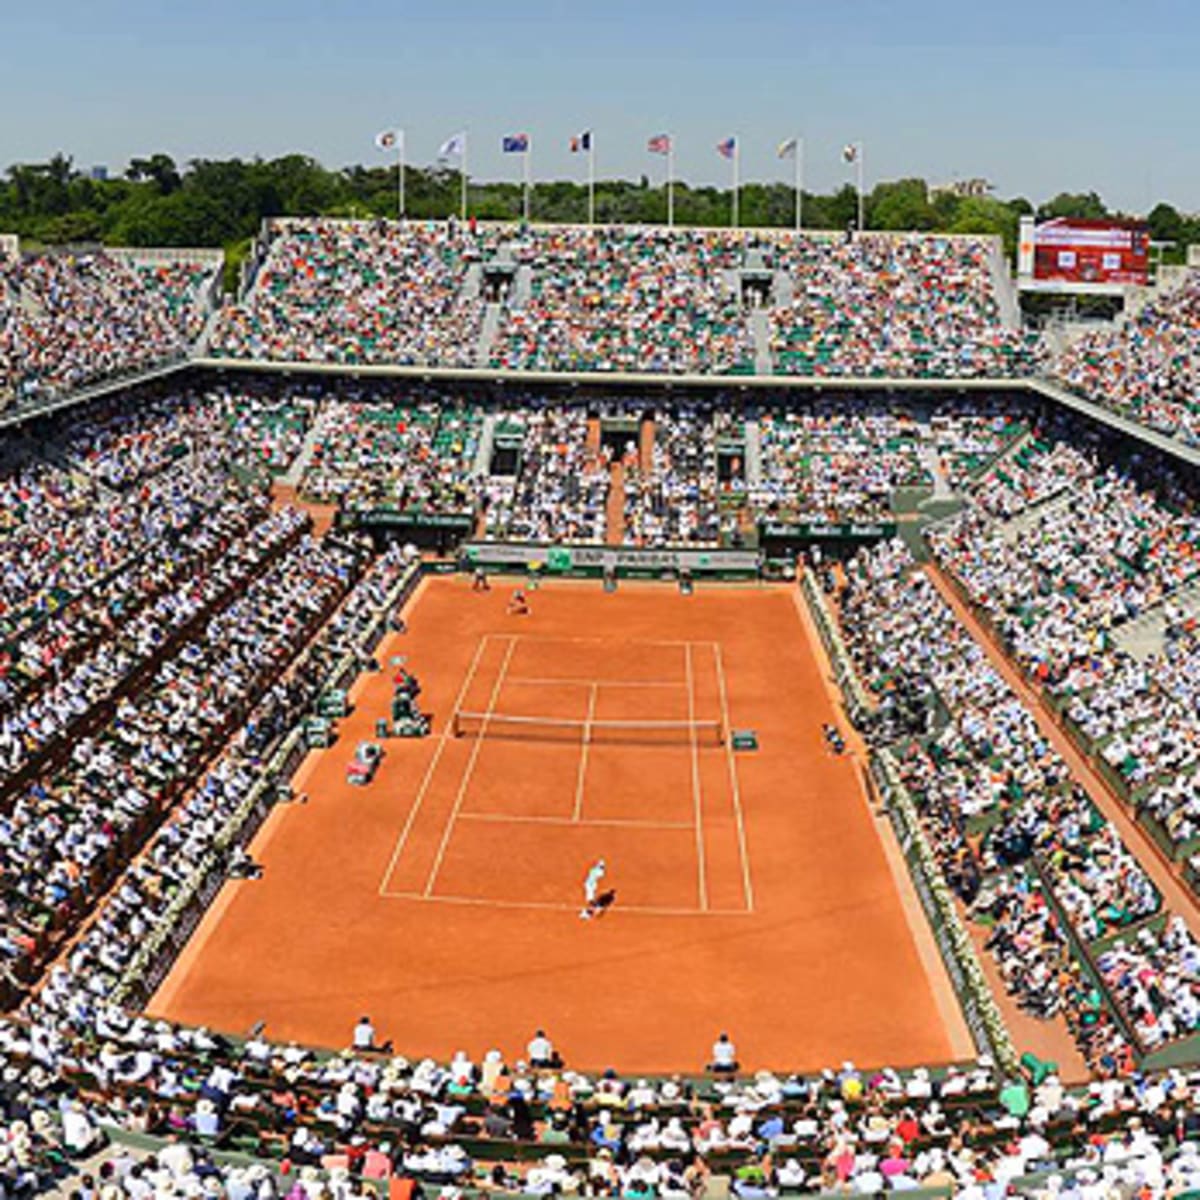 Roland Garros Images : Rafael Nadal Could Tie The Men S Majors Record